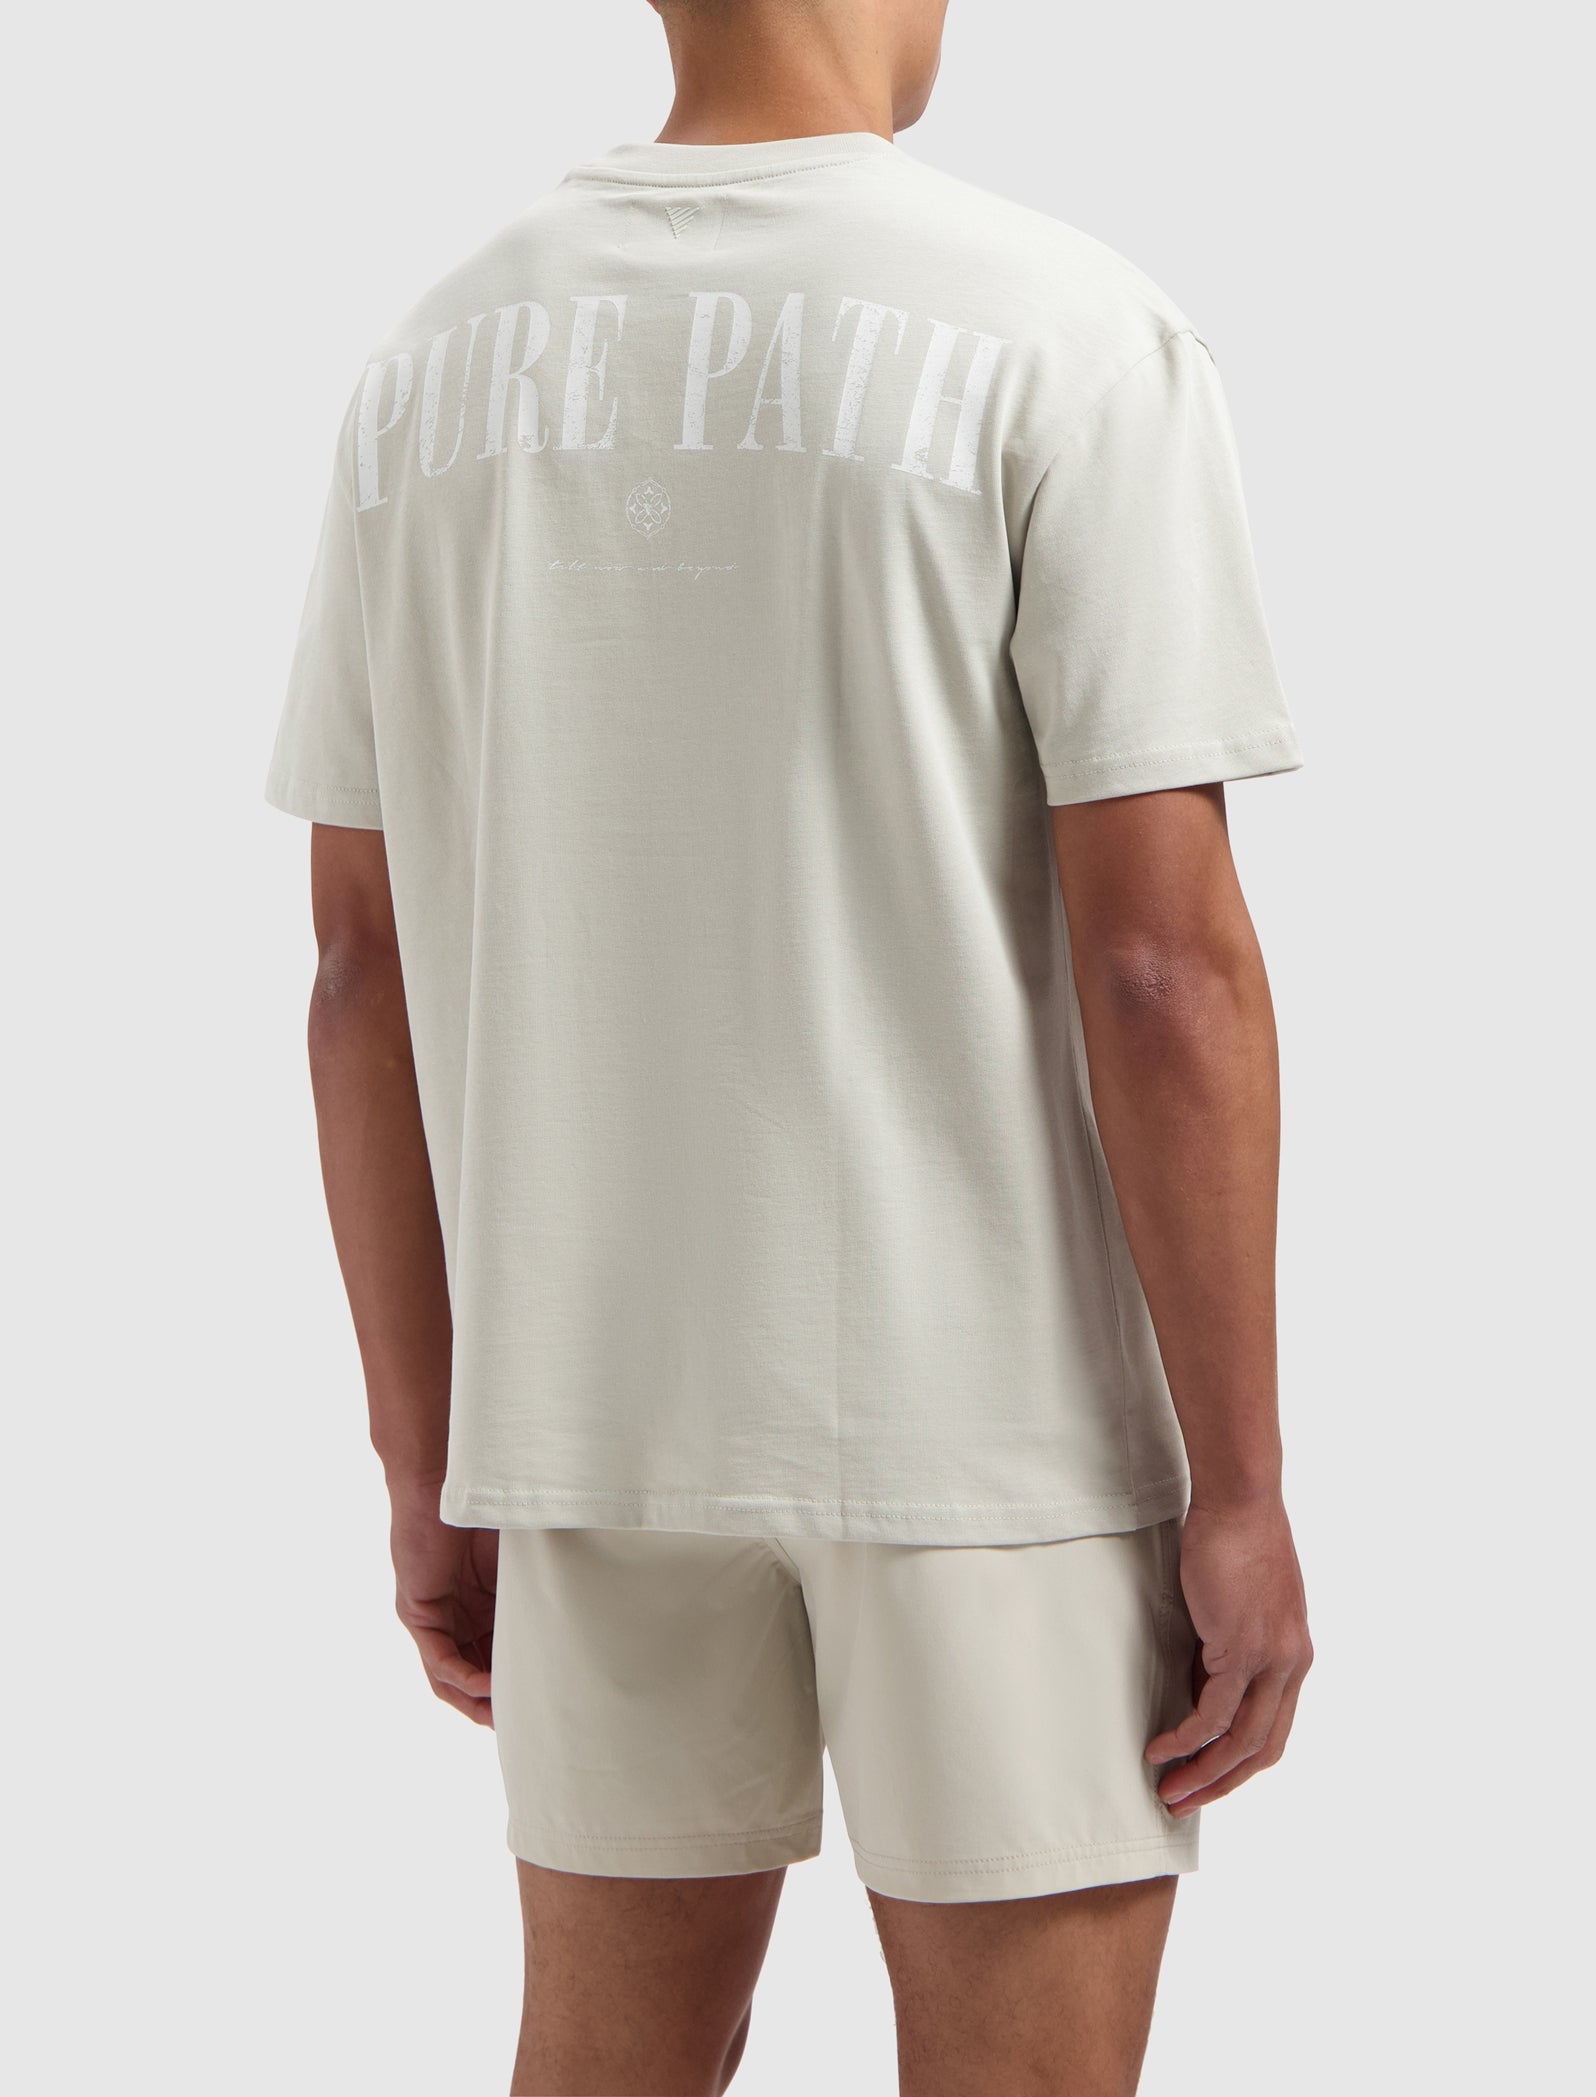 Pure Path Vintage Back Print T-shirt